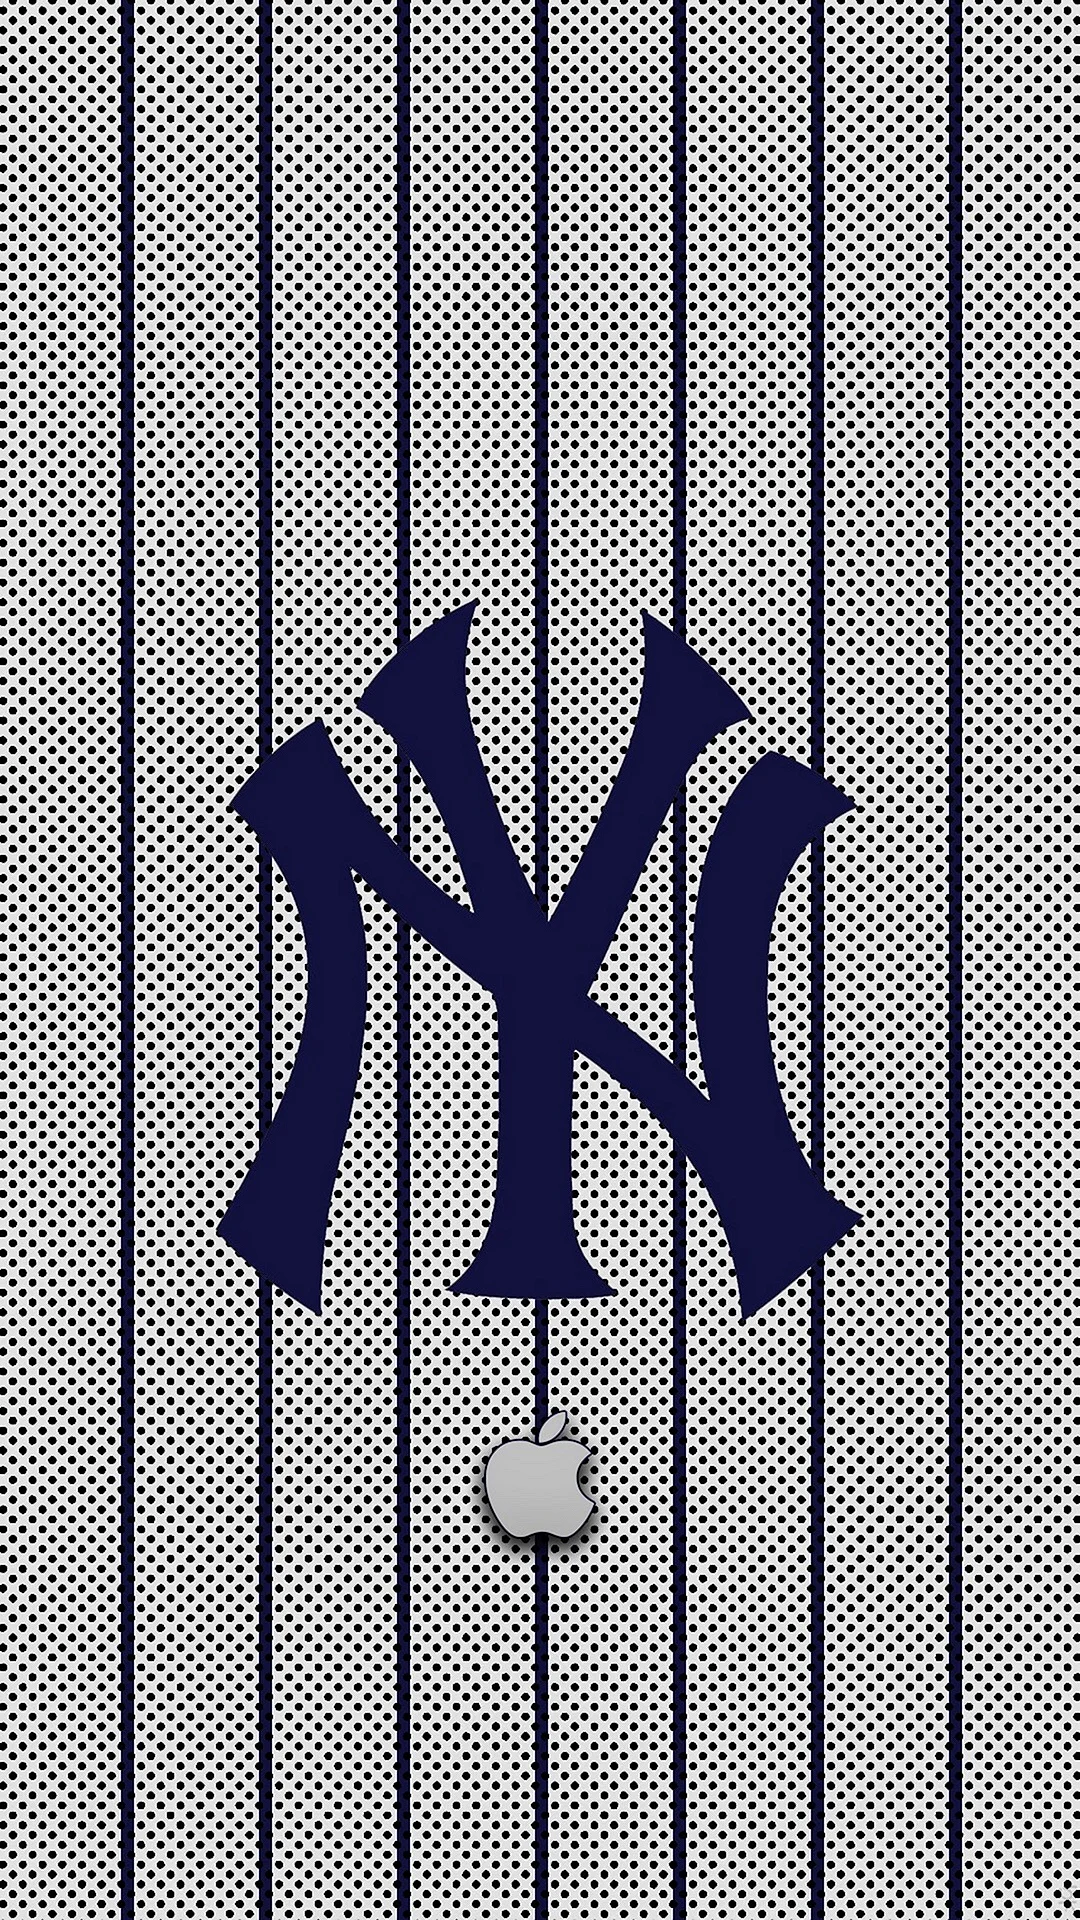 New York Yankees Logo Wallpaper For iPhone